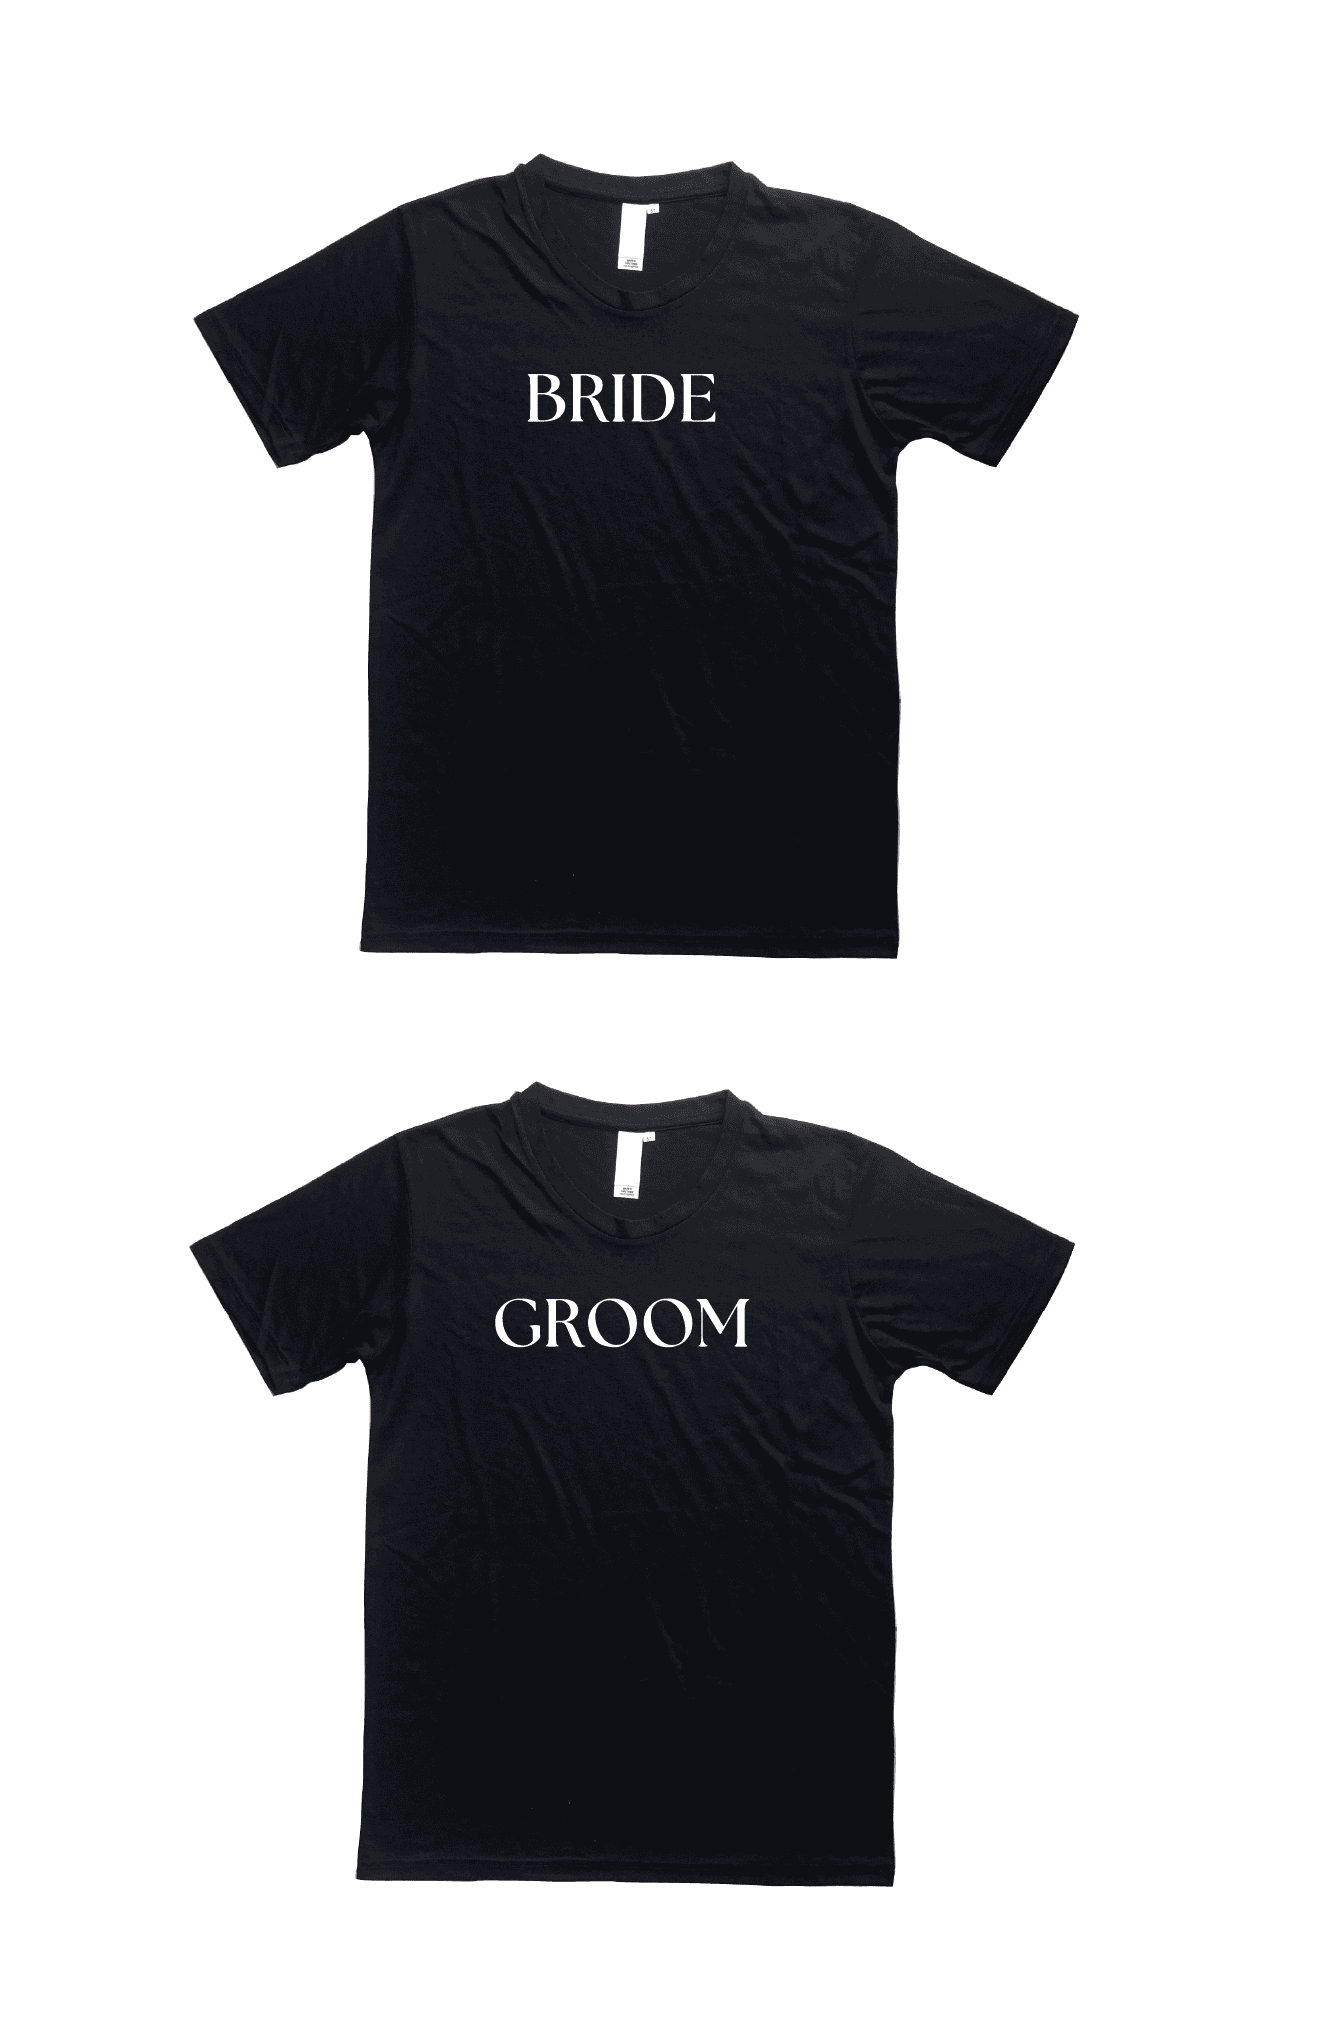 Bride + Groom Combo Pack